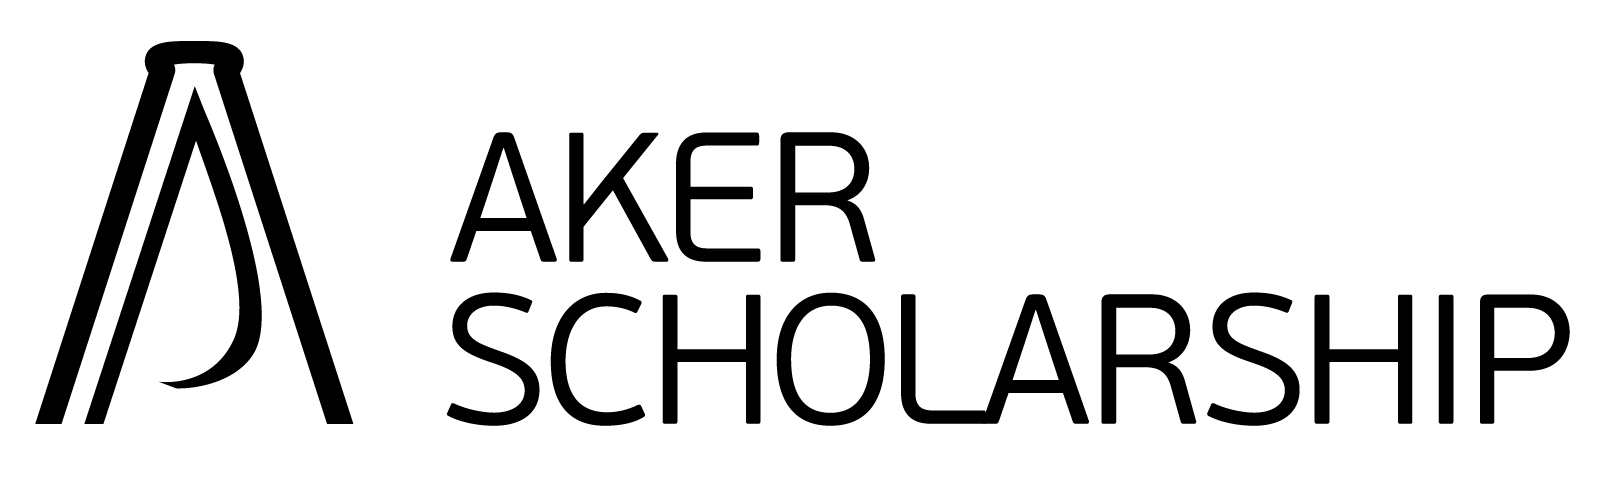 Aker Scholarship logo